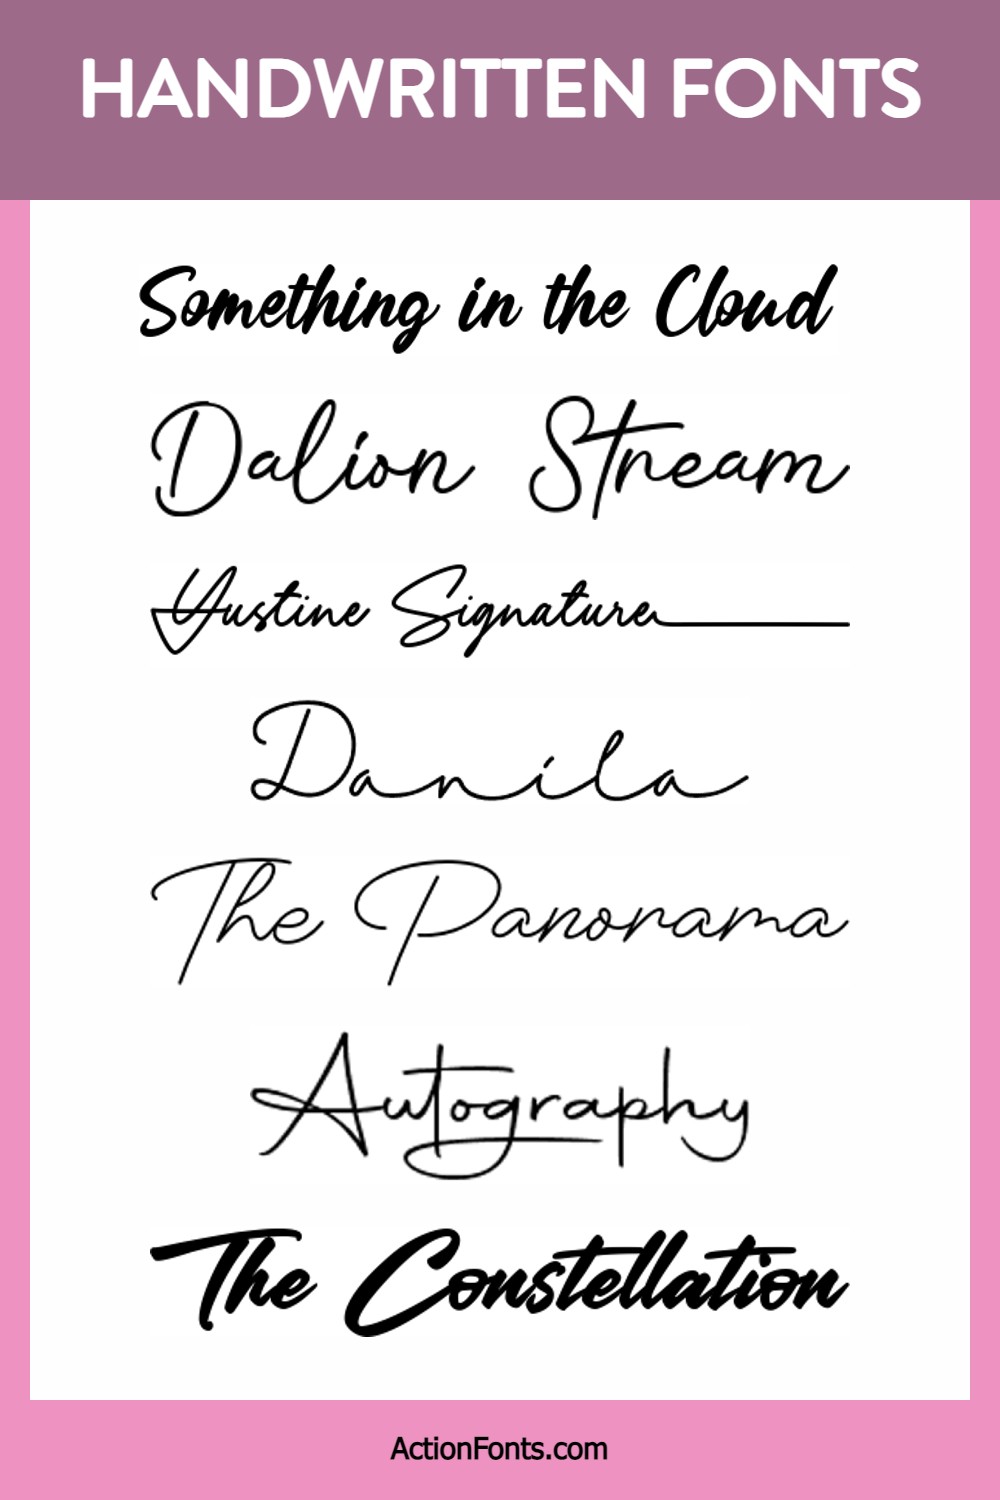 pinterest image of Handwritten fonts